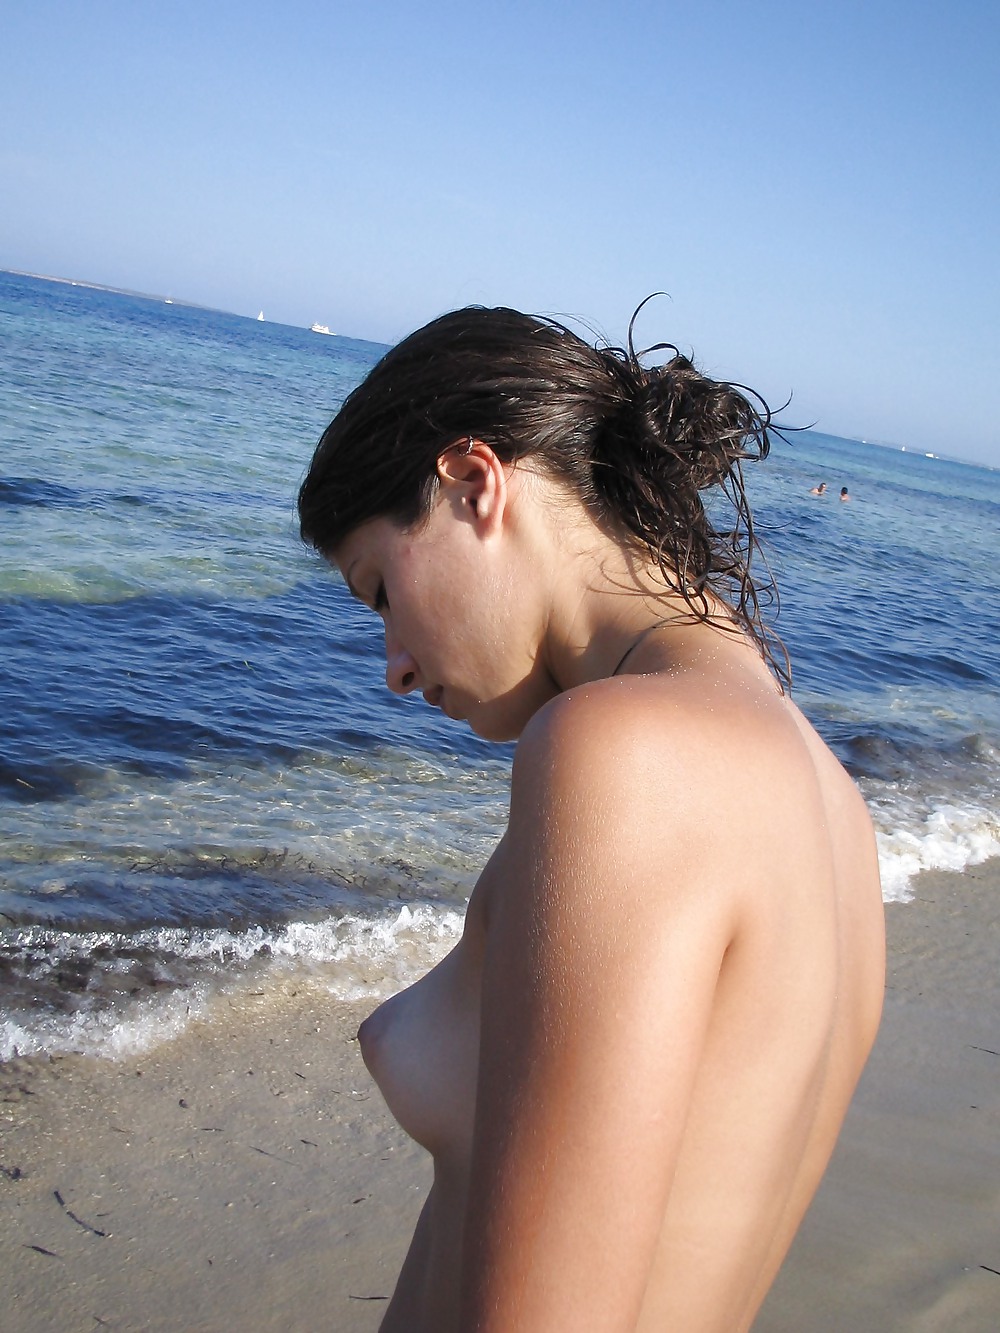 Italian teen poses for his bf - hot tight body #7887772